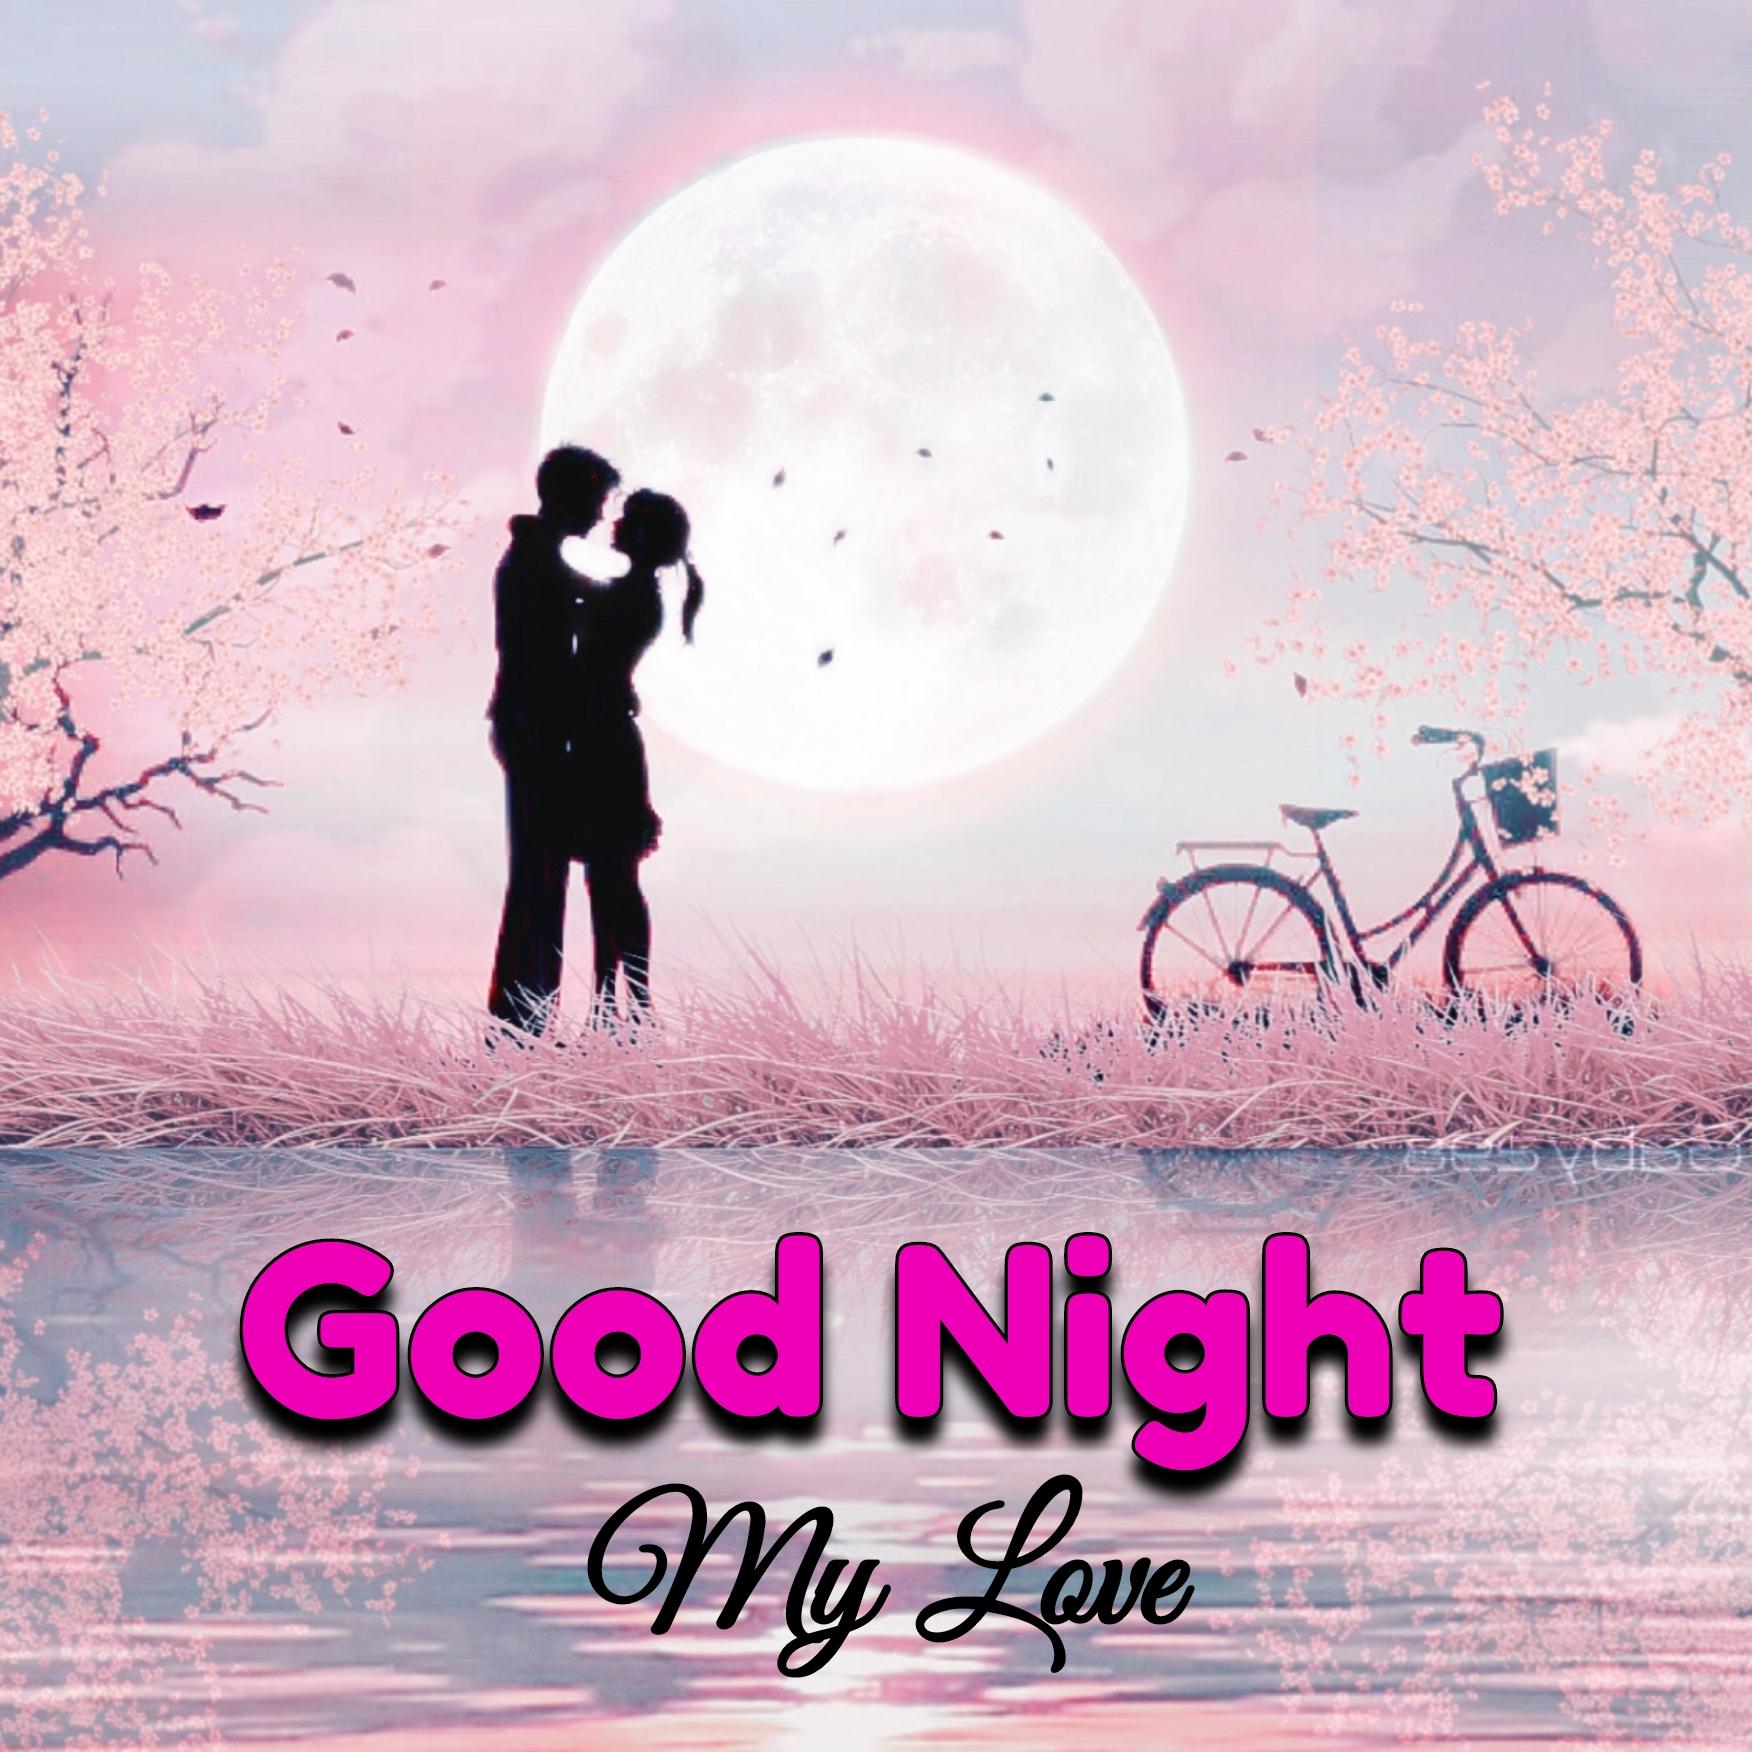 Romantic Good Night Hd Images